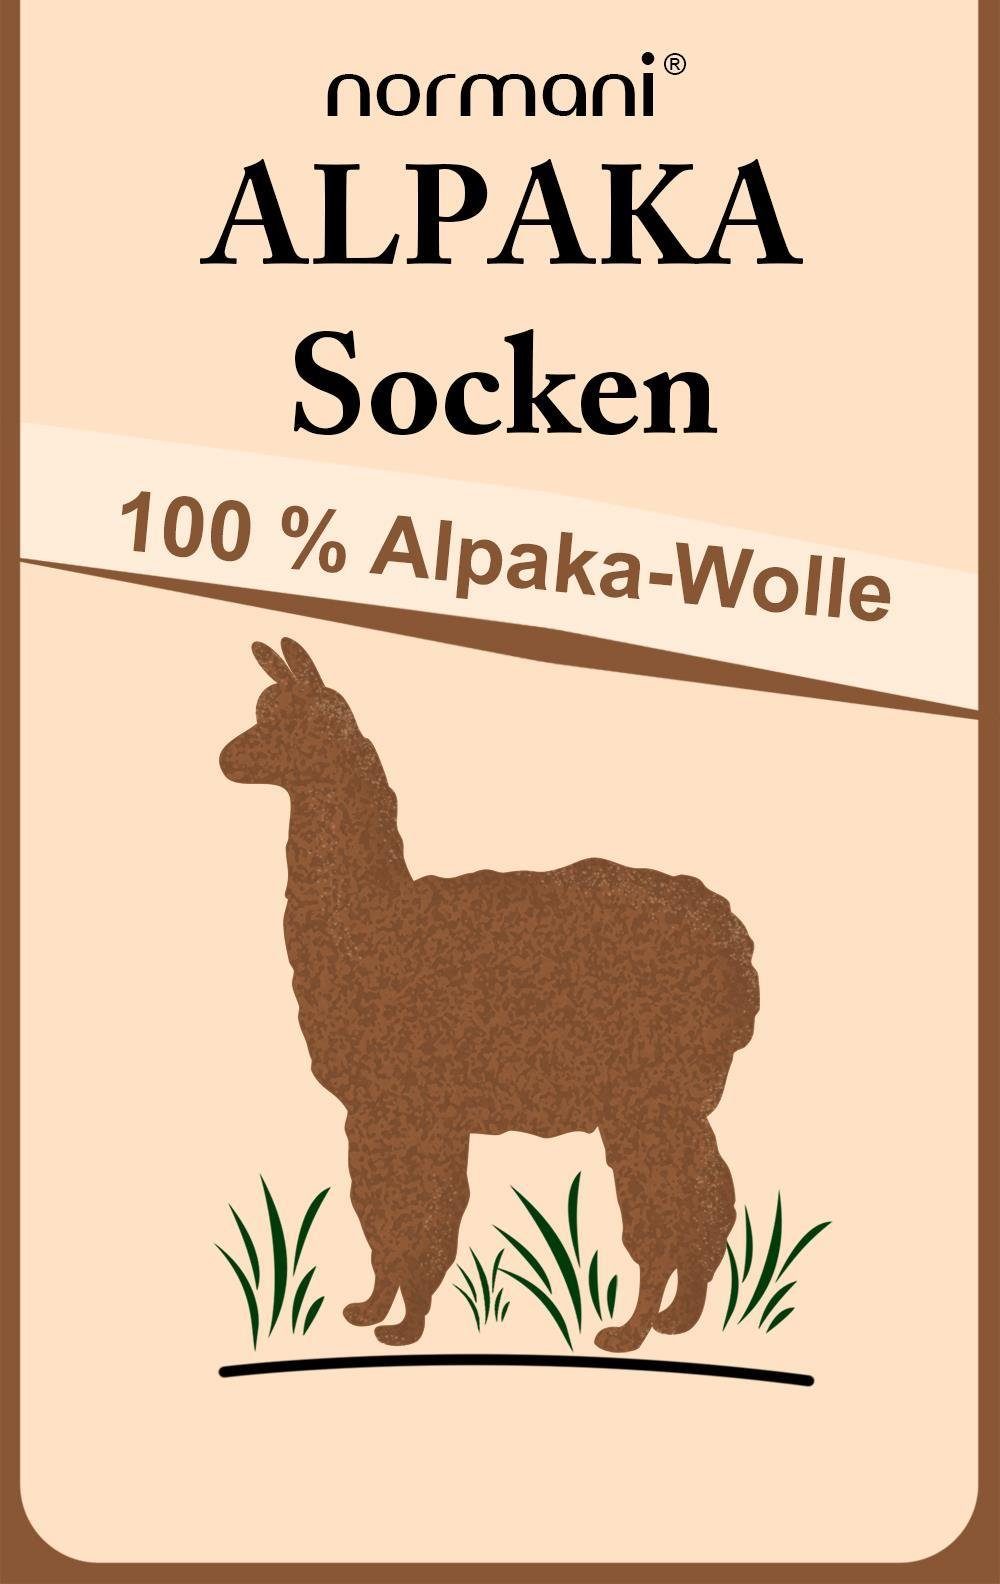 Thermosocken Hellgrau 2 mit Alpaka-Wolle Paar) normani Paar Alpaka-Socken 2 hochwertige Wolle (Set,